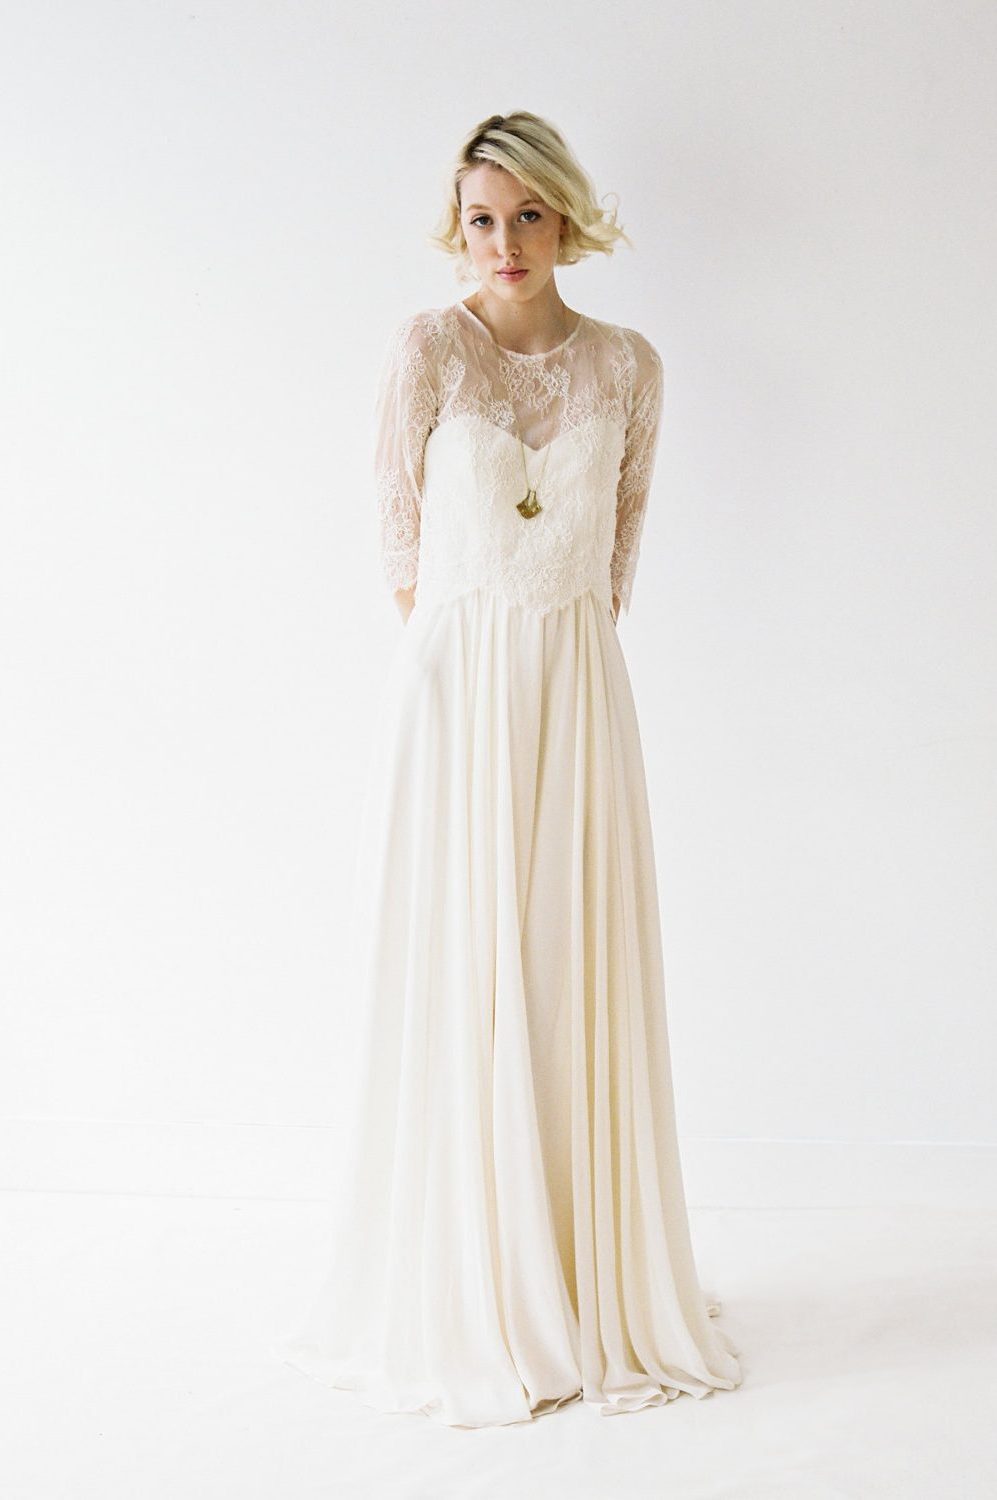 Blush Chiffon Wedding Dress with a Lace Shirt - Chic Vintage Brides ...